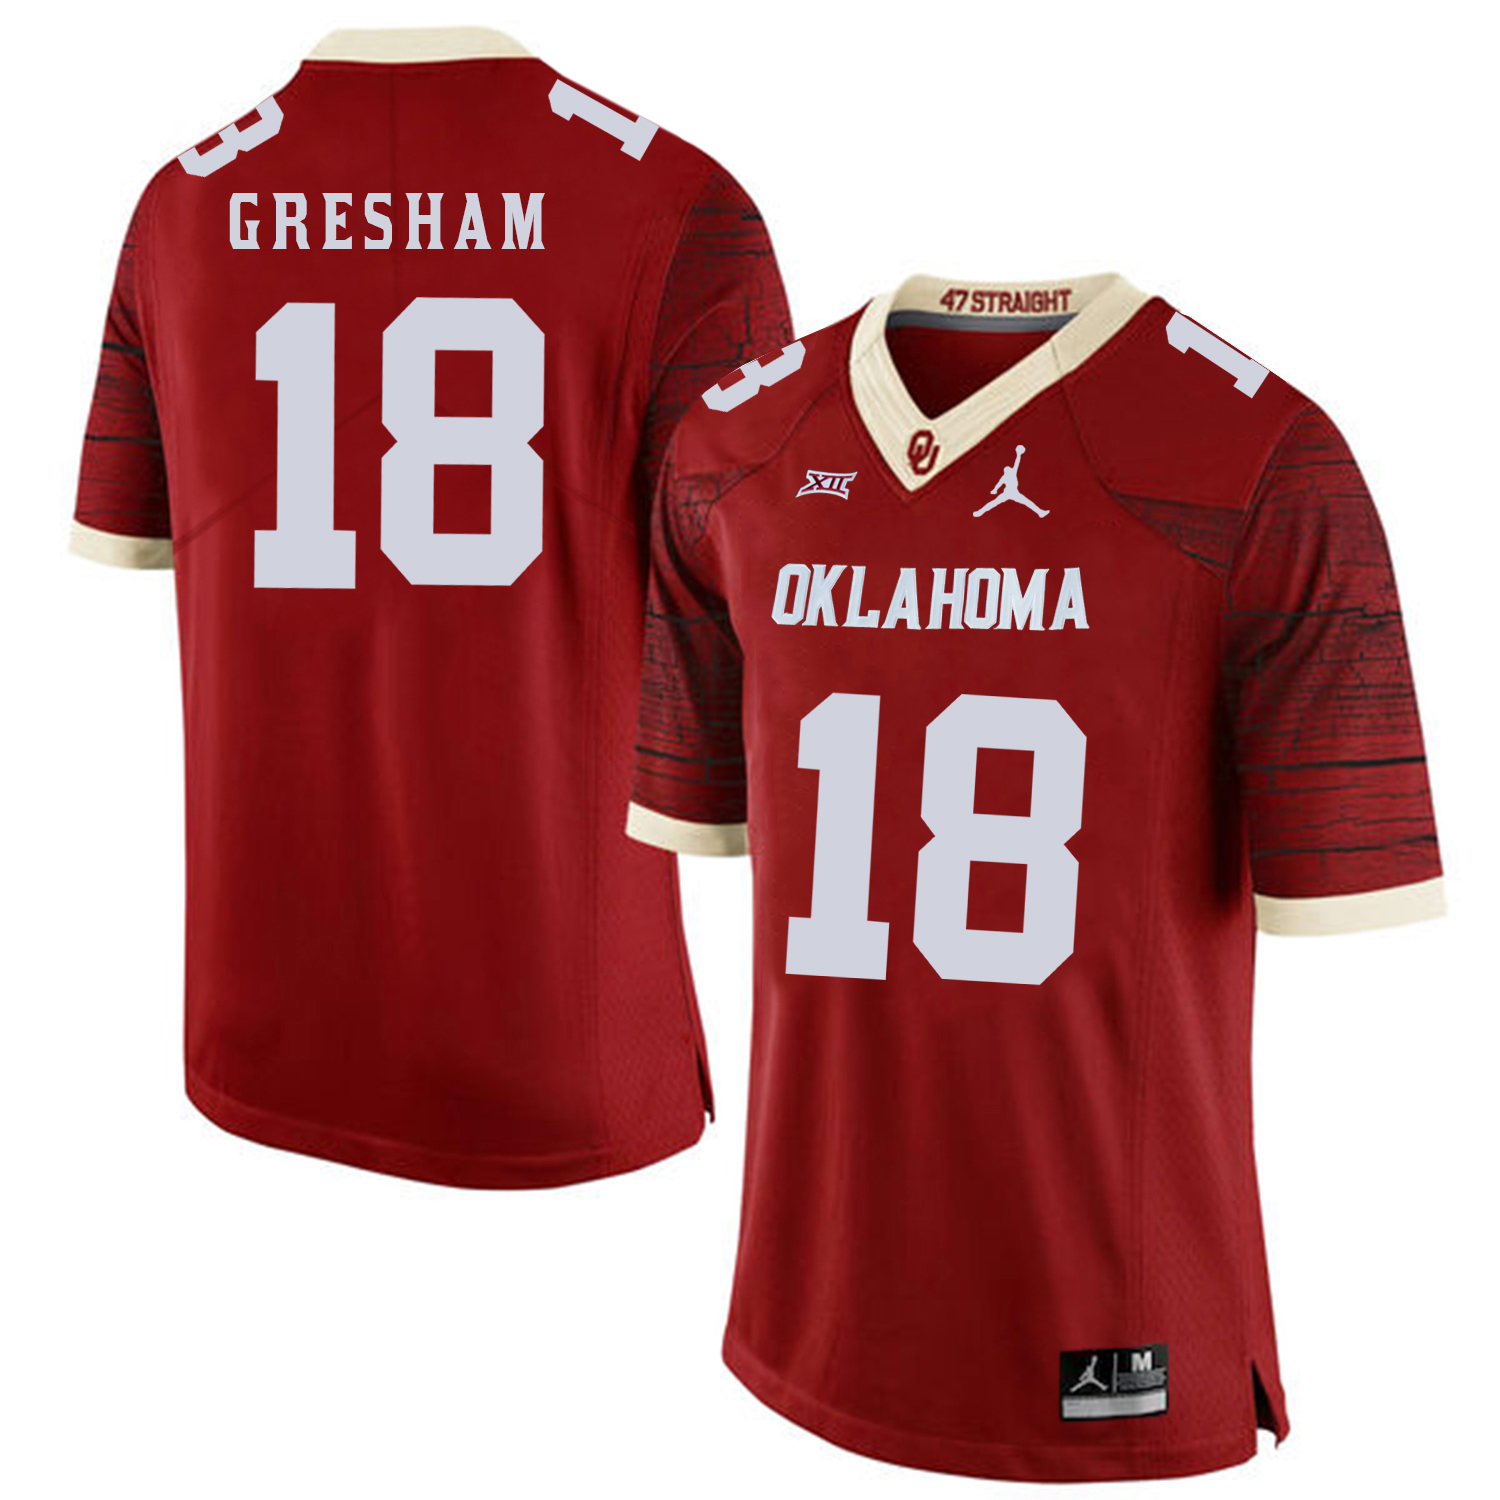 Oklahoma Sooners 18 Jermaine Gresham Red 47 Game Winning Streak College Football Jersey - Click Image to Close